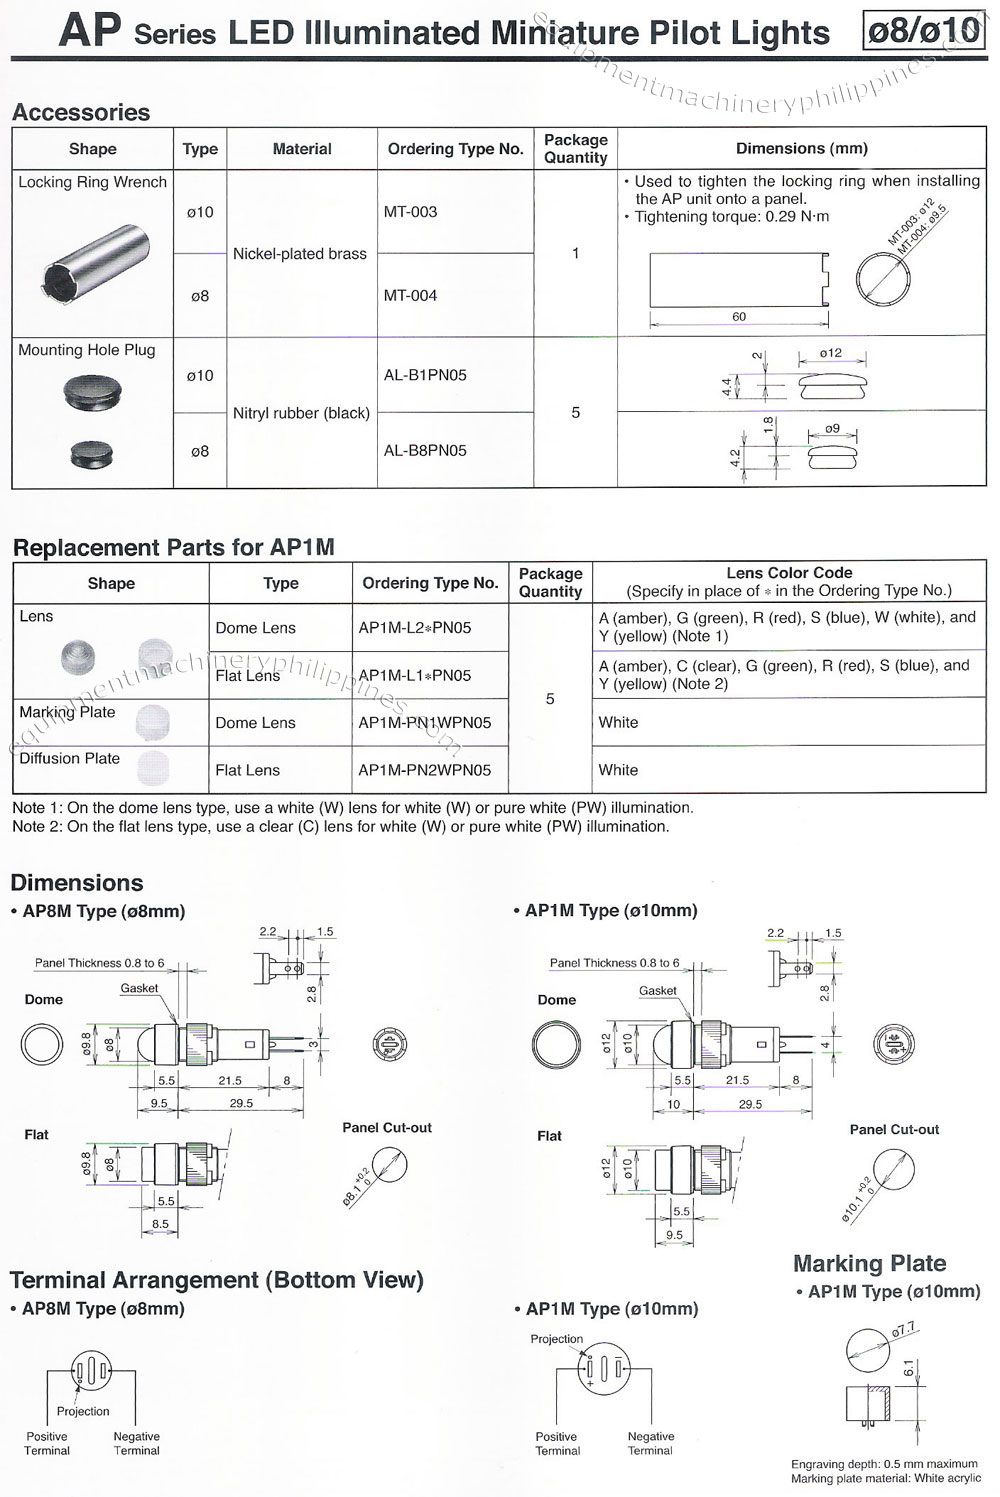 IDEC IP Series LED Illuminated Miniature Pilot Lights Accessories, Replacement Parts, Dimensions